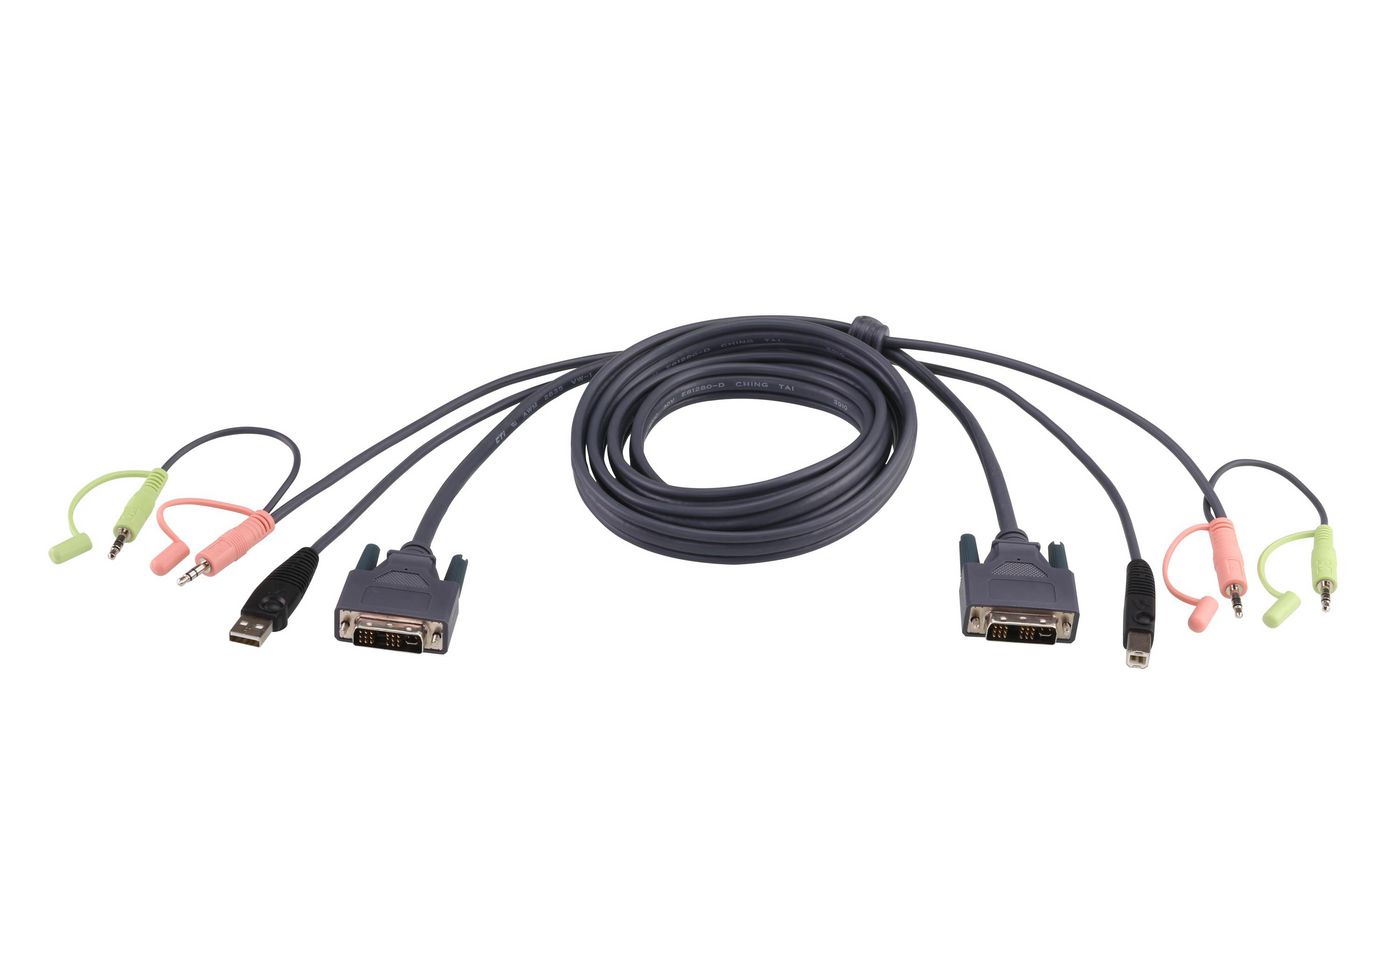 Aten 2L-7D02U DVI Cable 1.8m 